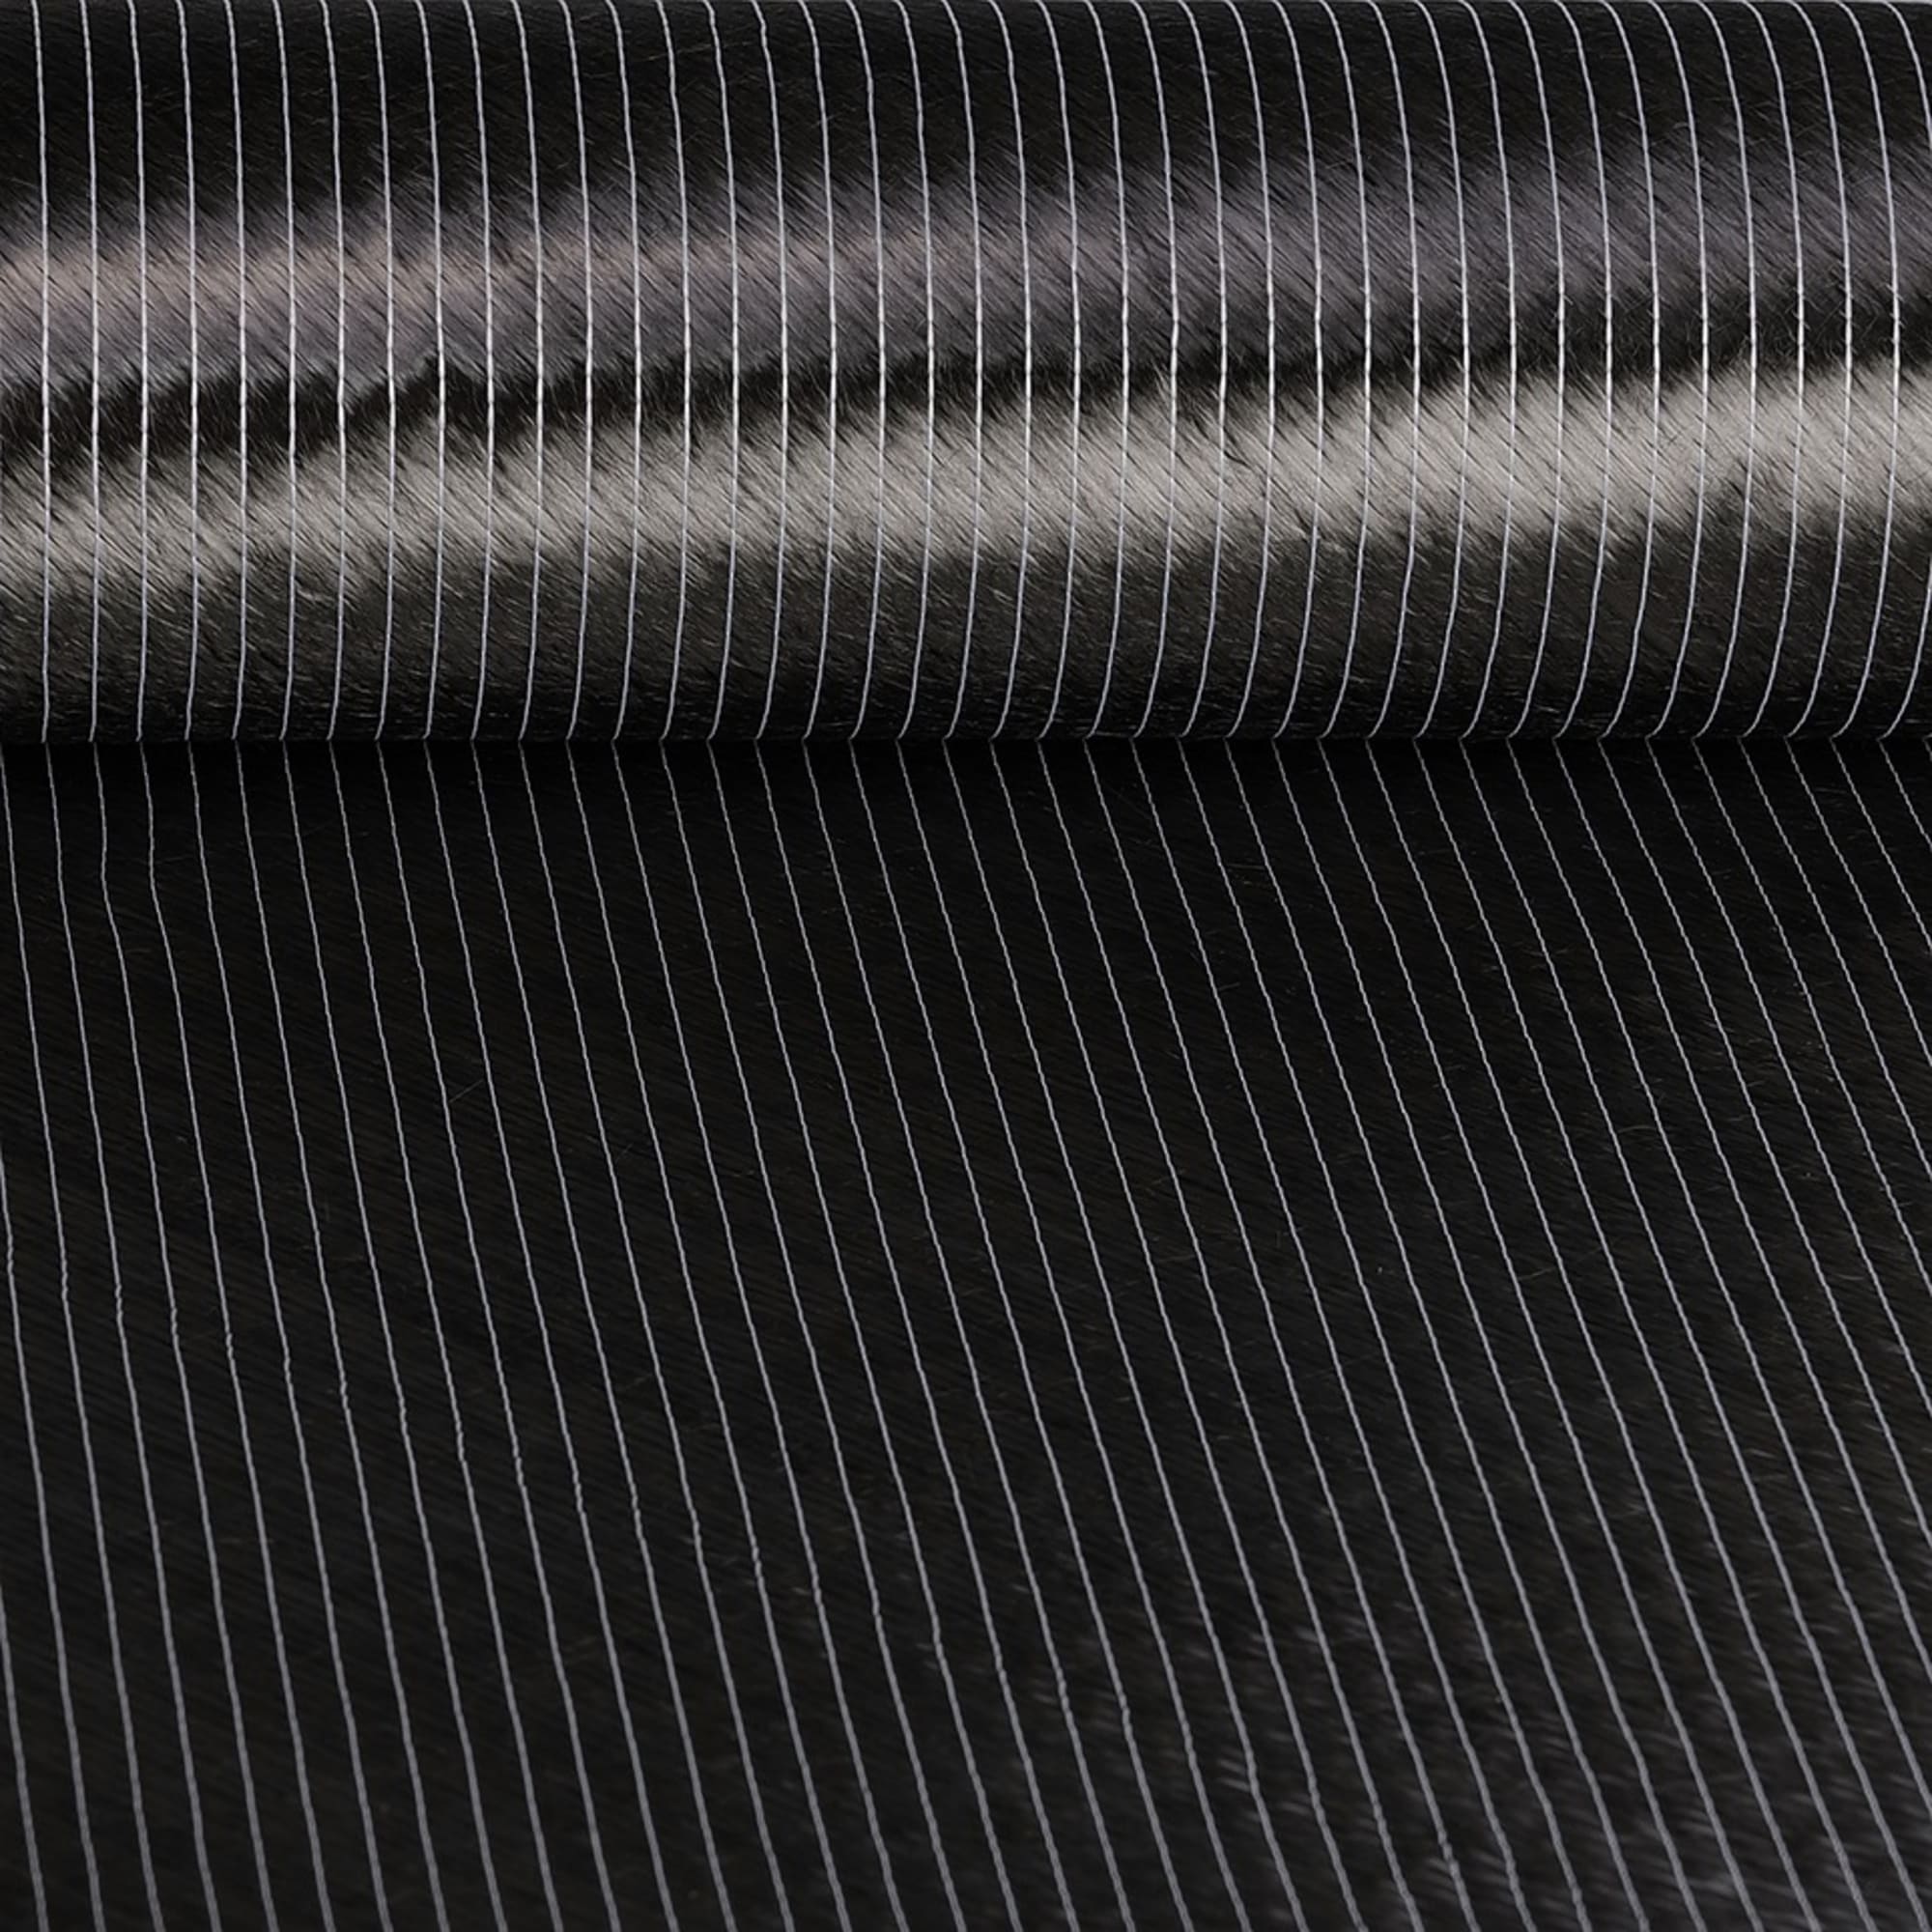 SIGRATEX® Carbon non-crimp fabric 310 g/m² (biaxial) 127 cm, image 2